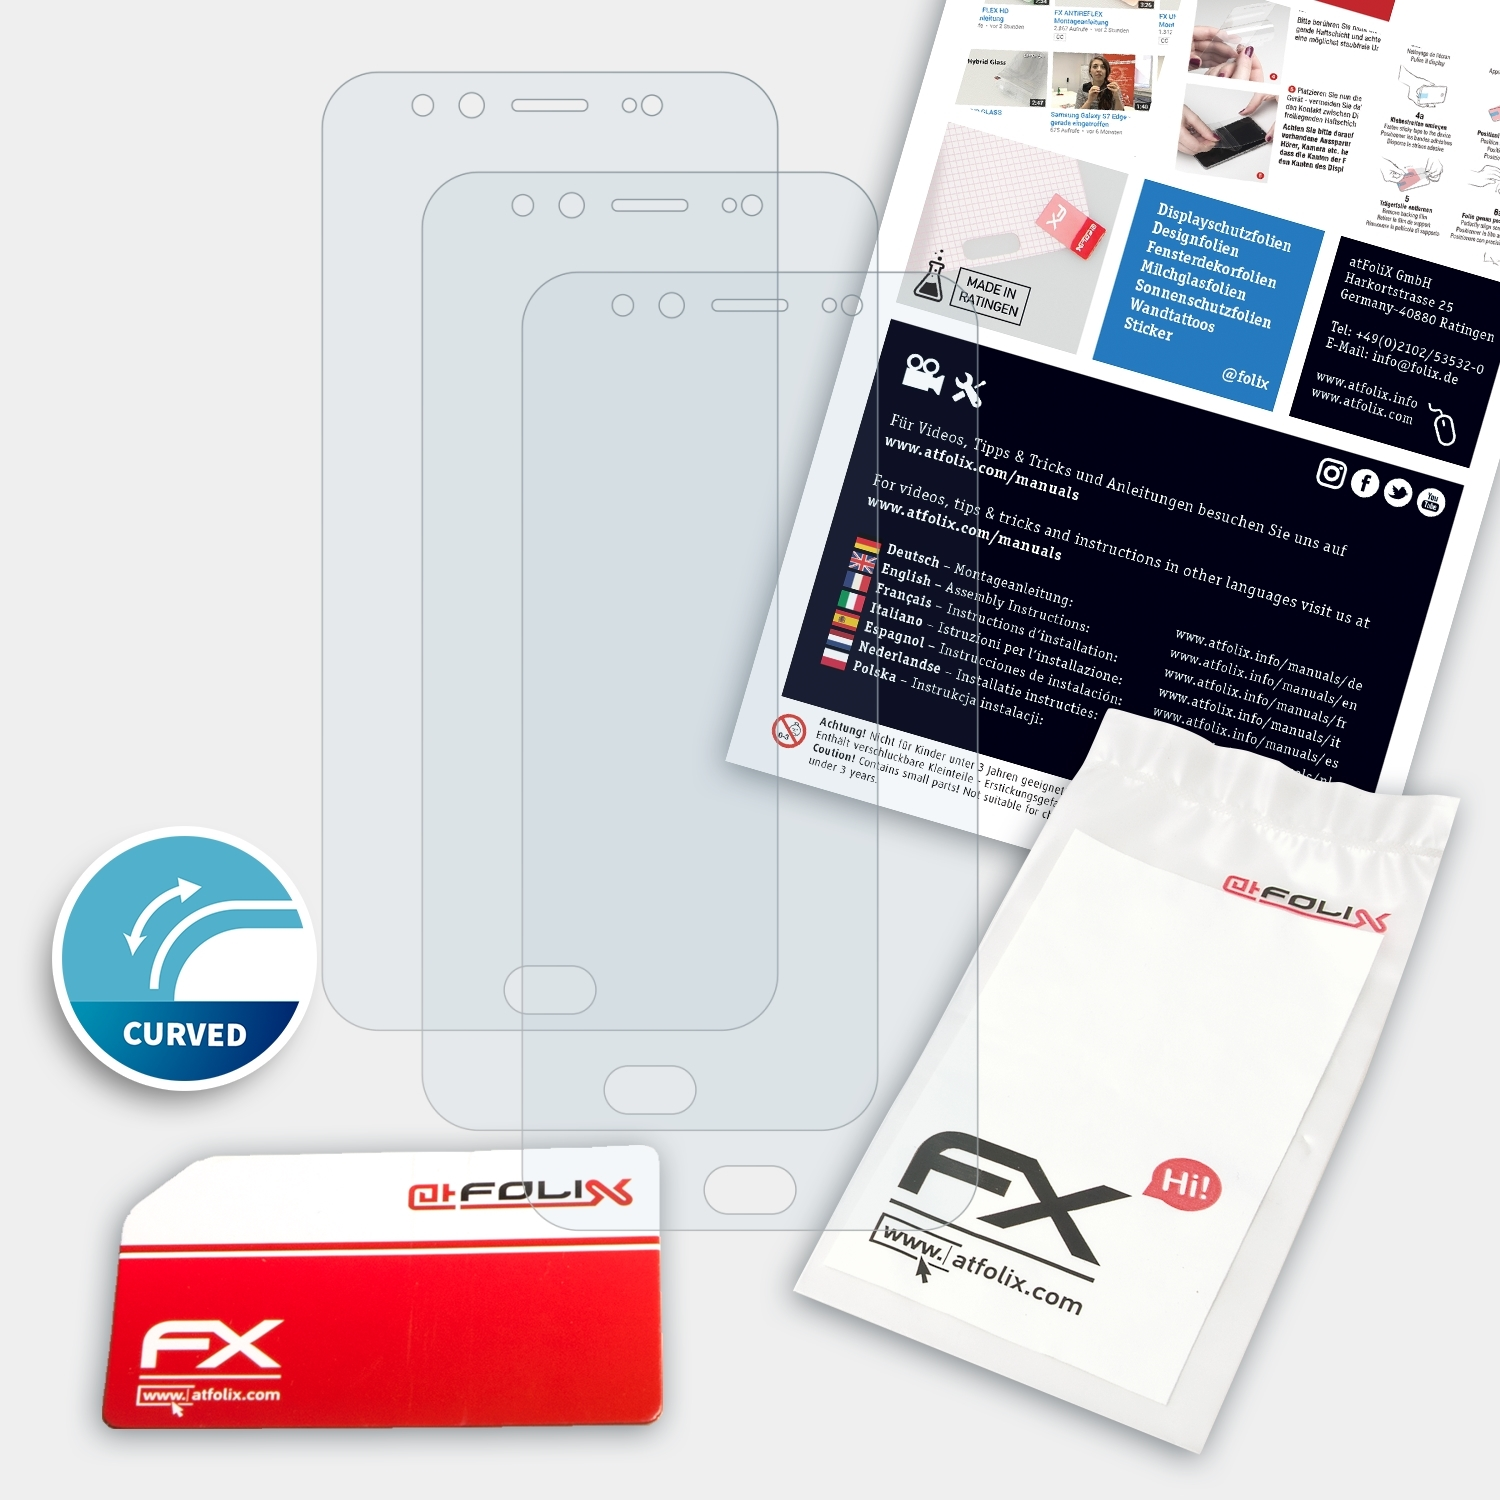 ATFOLIX 3x Plus) FX-ActiFleX Displayschutz(für Vivo V5